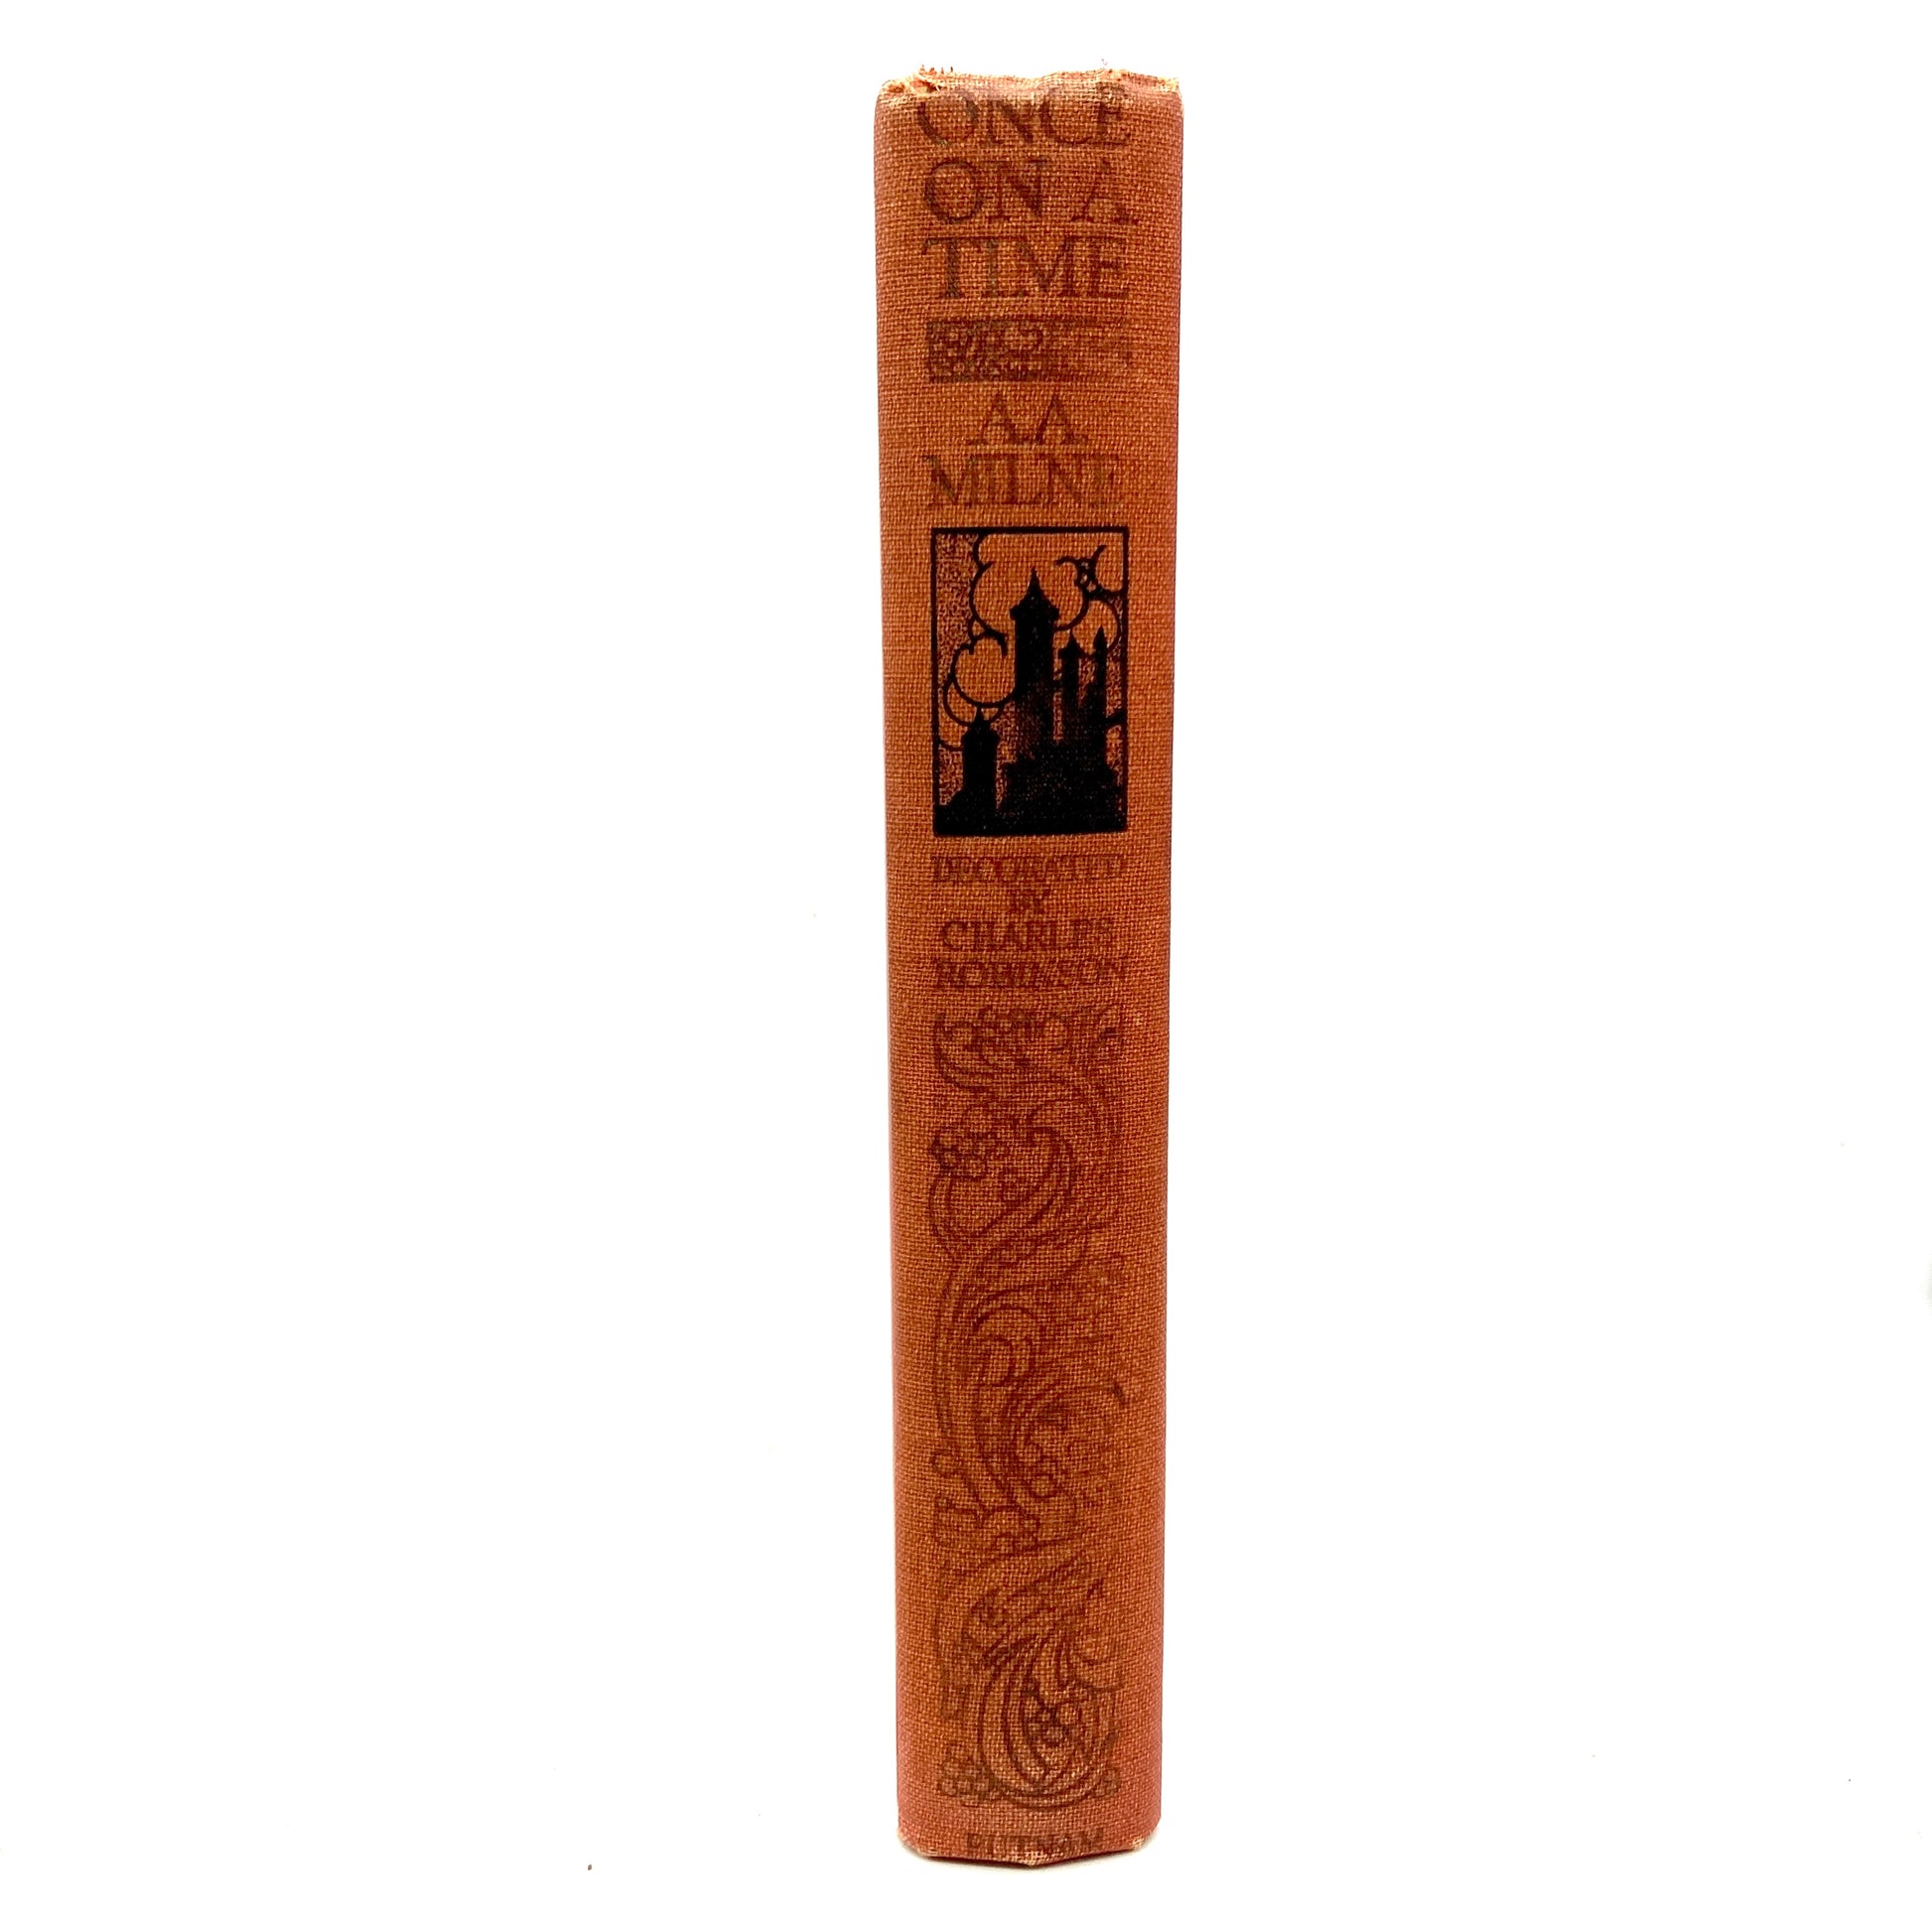 MILNE, A.A. "Once On a Time" [G.P. Putnam's Sons, 1922] 1st Edition - Buzz Bookstore